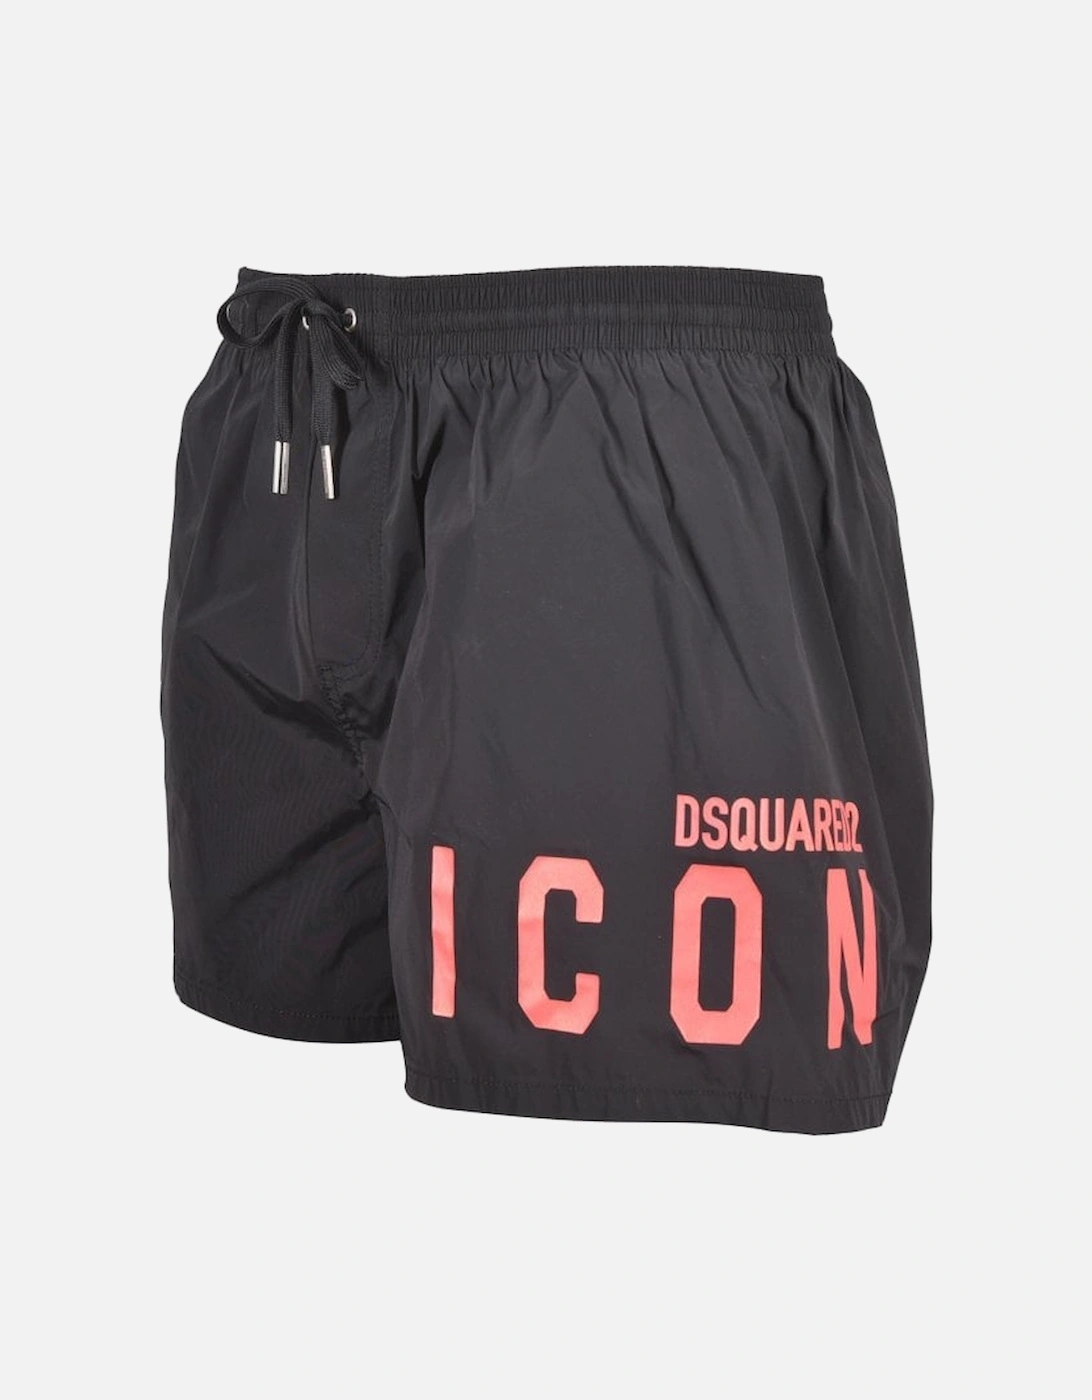 ICON Front Logo Swim Shorts, Black/coral